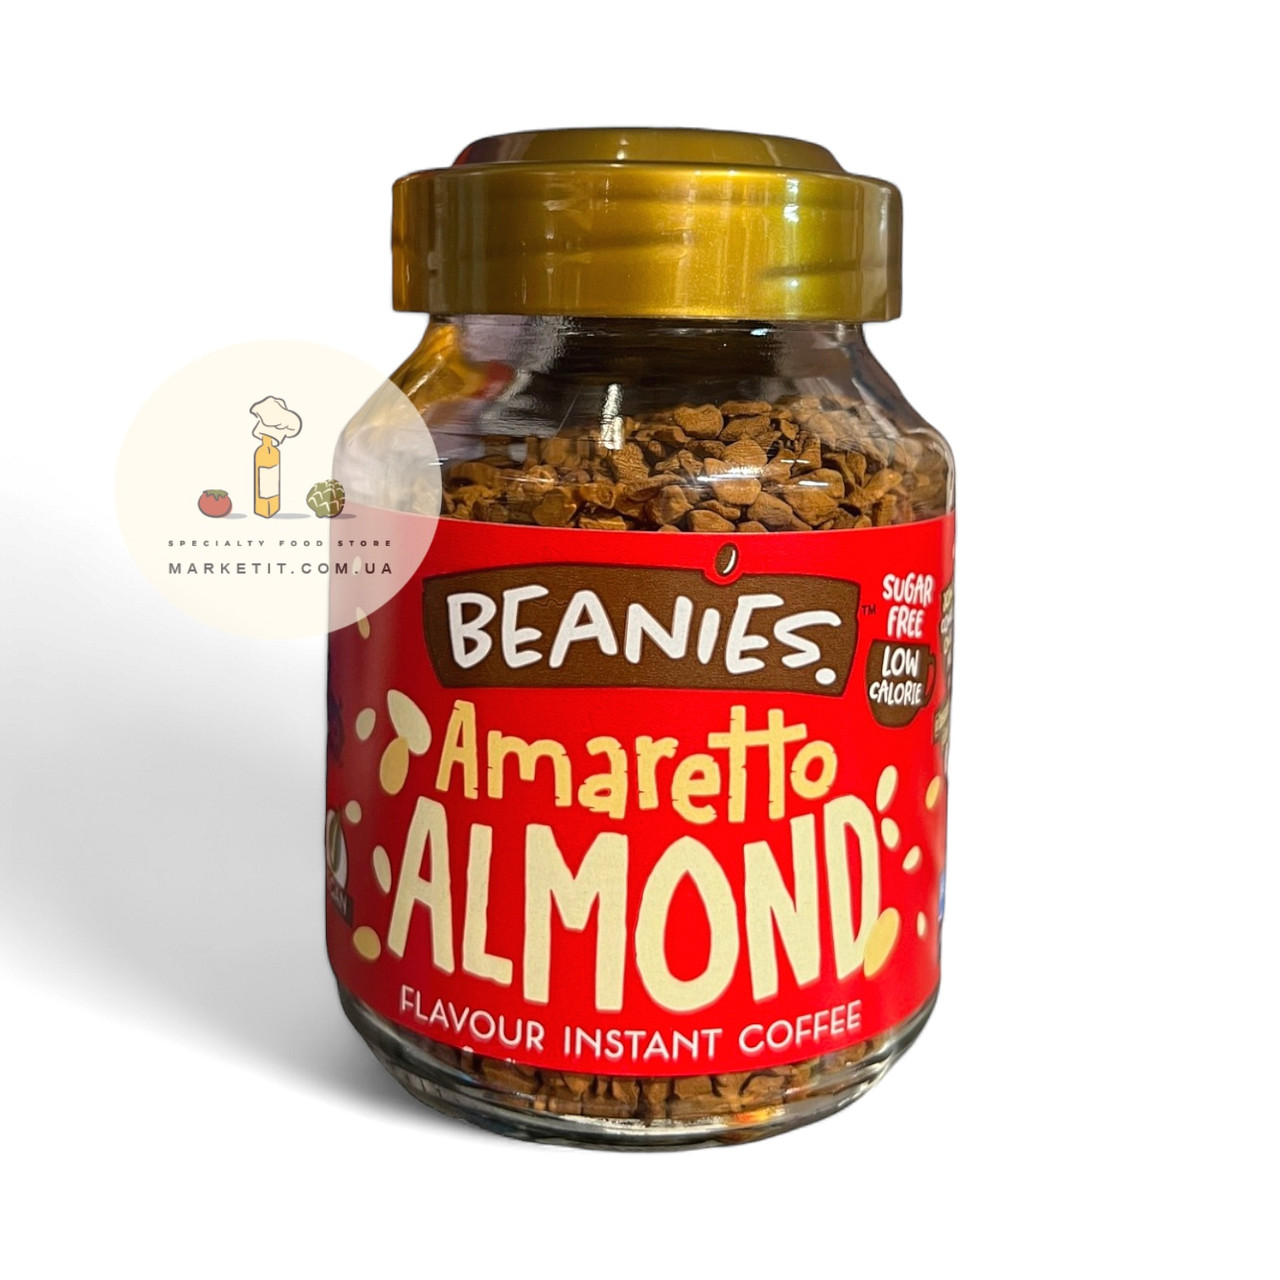 Розчинна кава Beanies Amaretto Almond, з ароматом Амарето (мигдаль) 50 г.